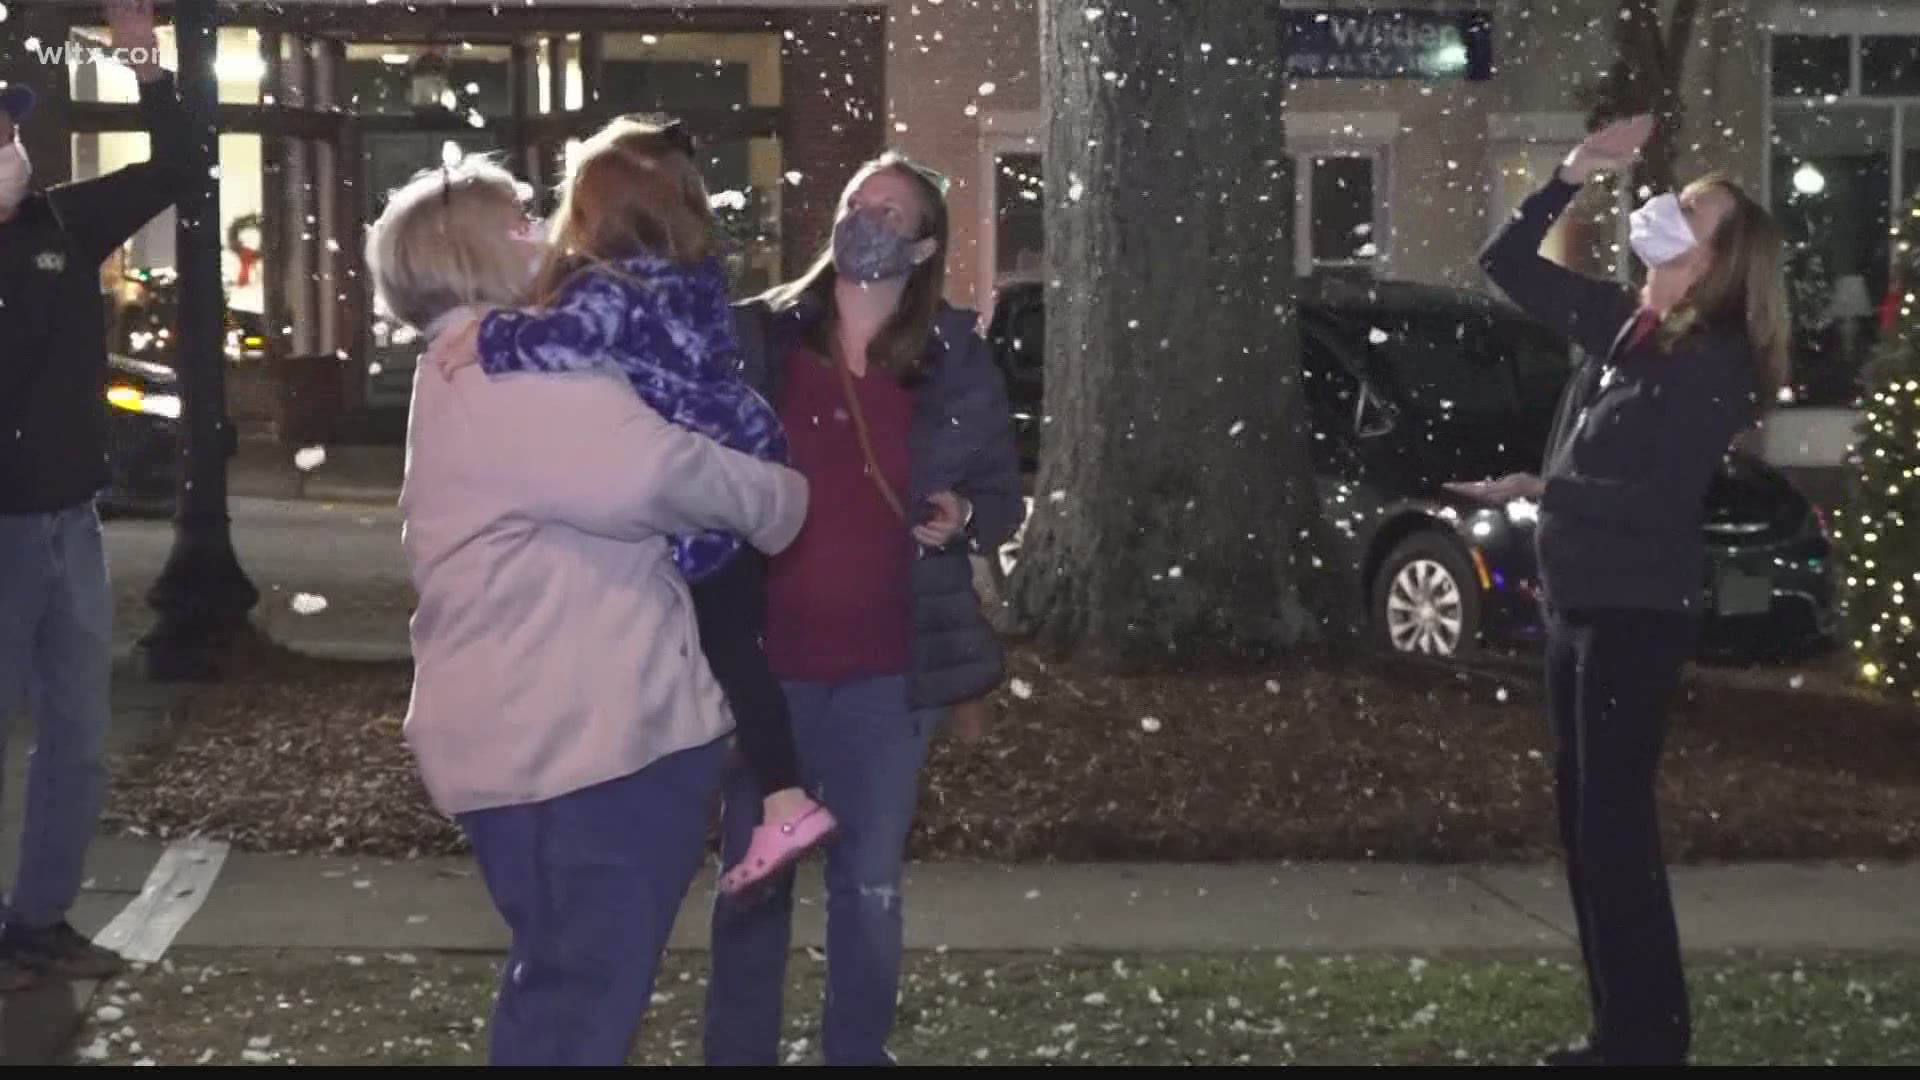 Bubble machine creates "snow" fun for families